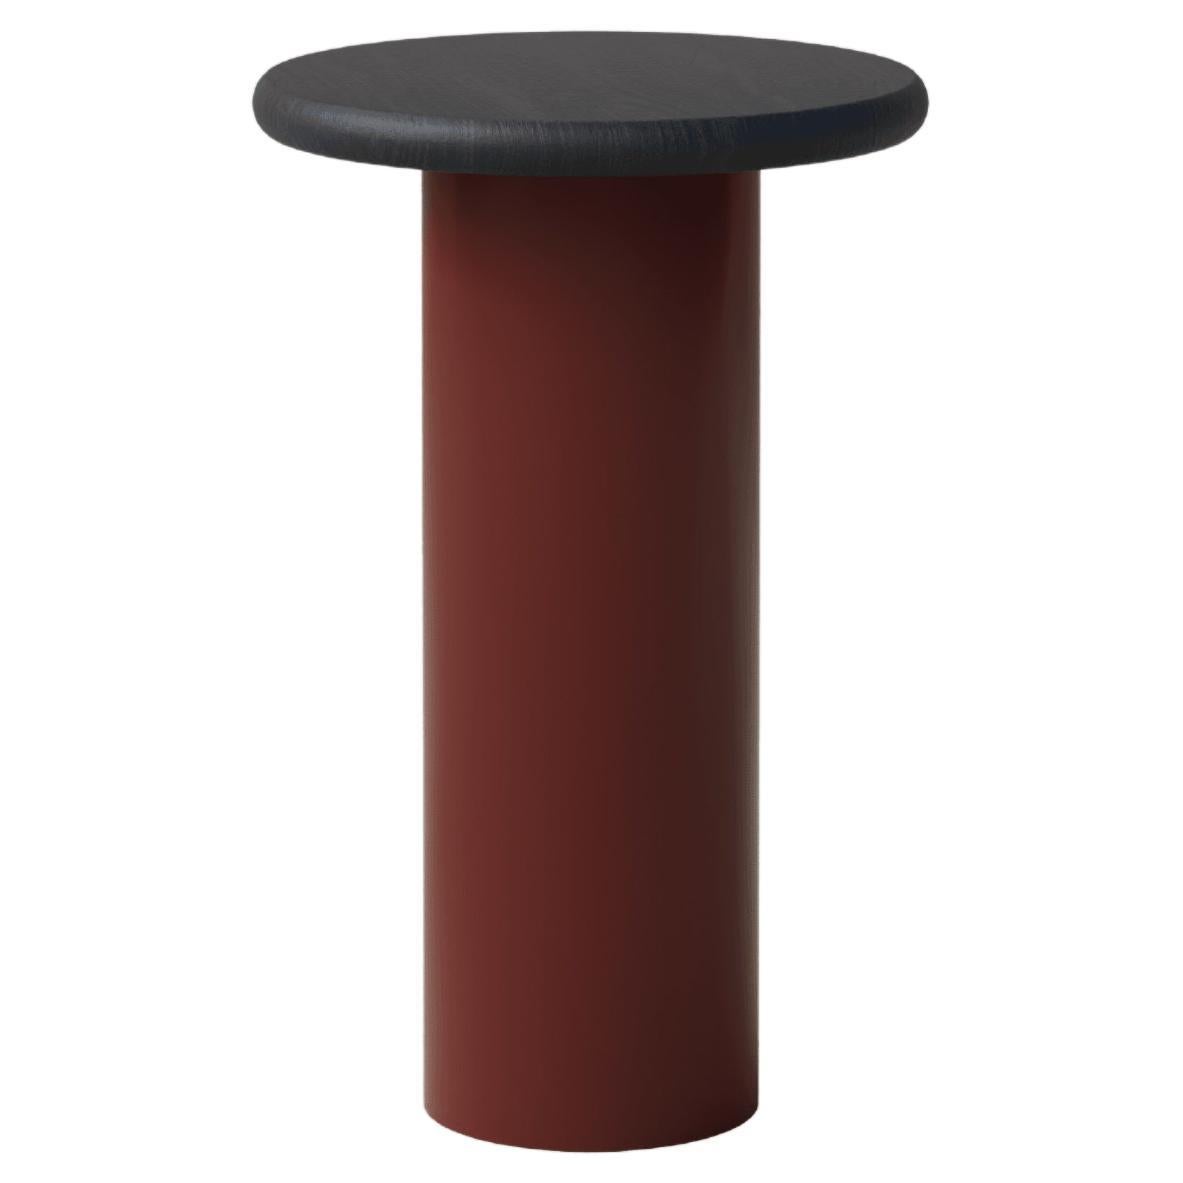 Raindrop Coffee Table, 300, Black Oak / Terracotta For Sale